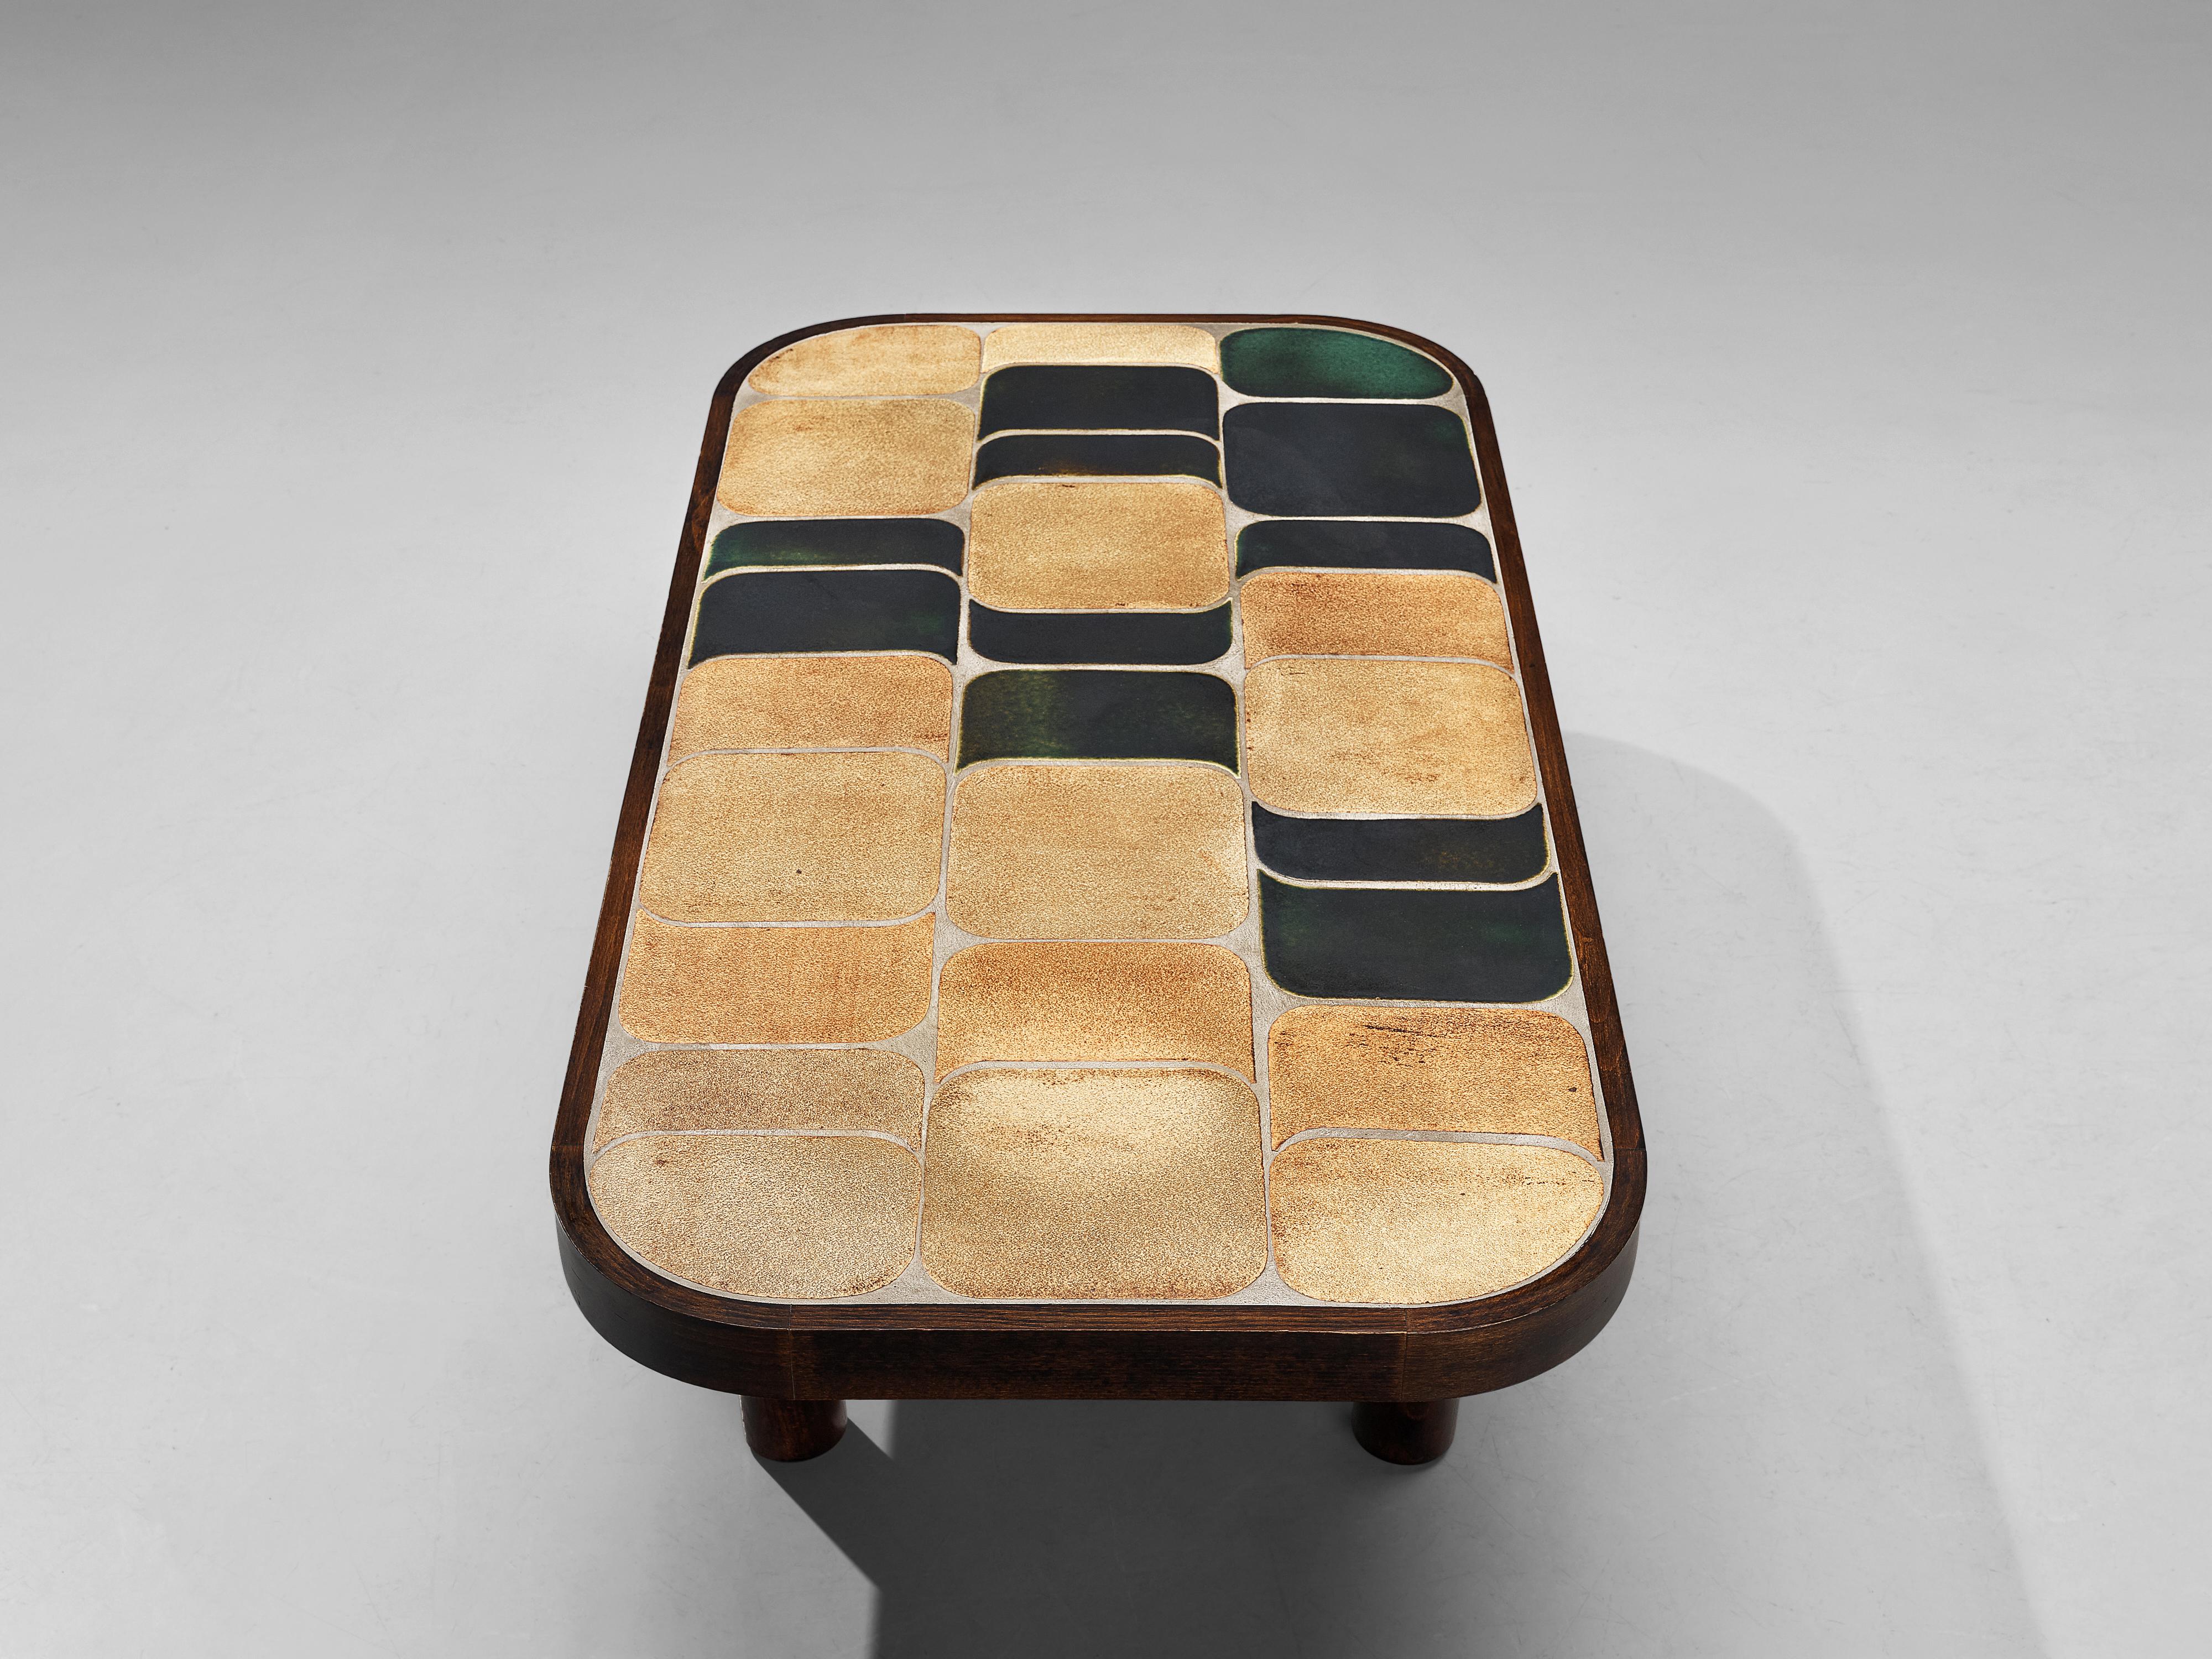 French Roger Capron ‘Shogun’ Coffee Table in Ceramic